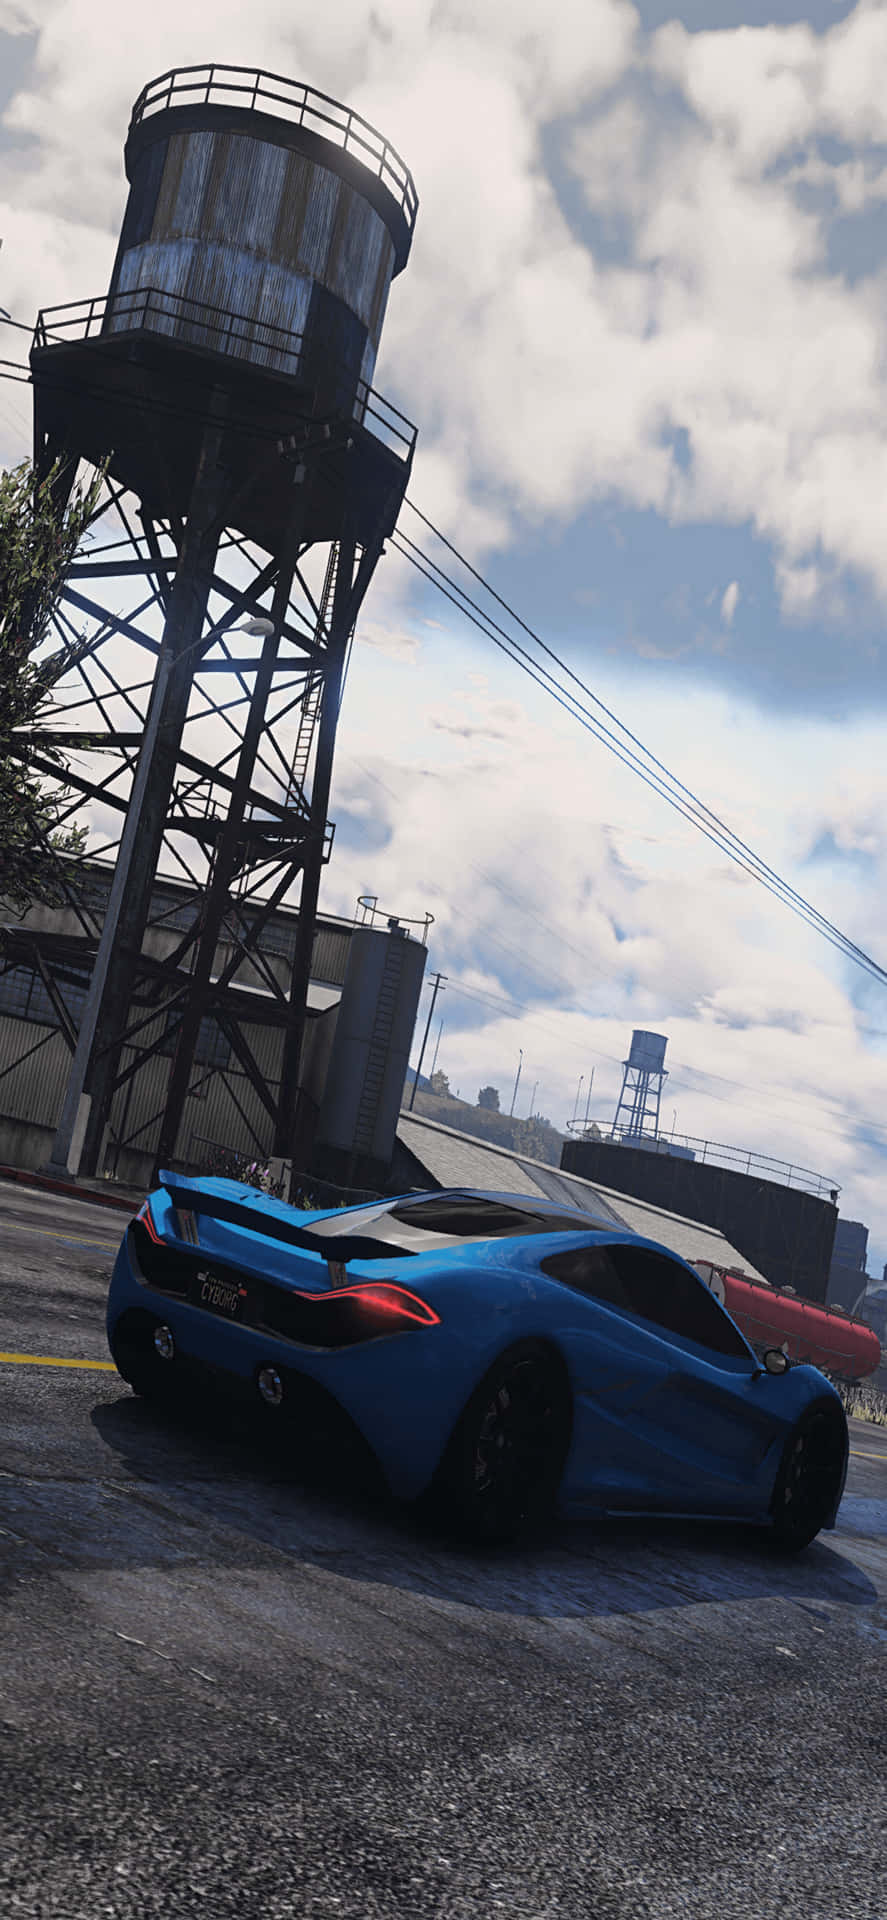 Iphonexs Max Bakgrundsbild: Grand Theft Auto V Bakgrund Blå Sportbil.